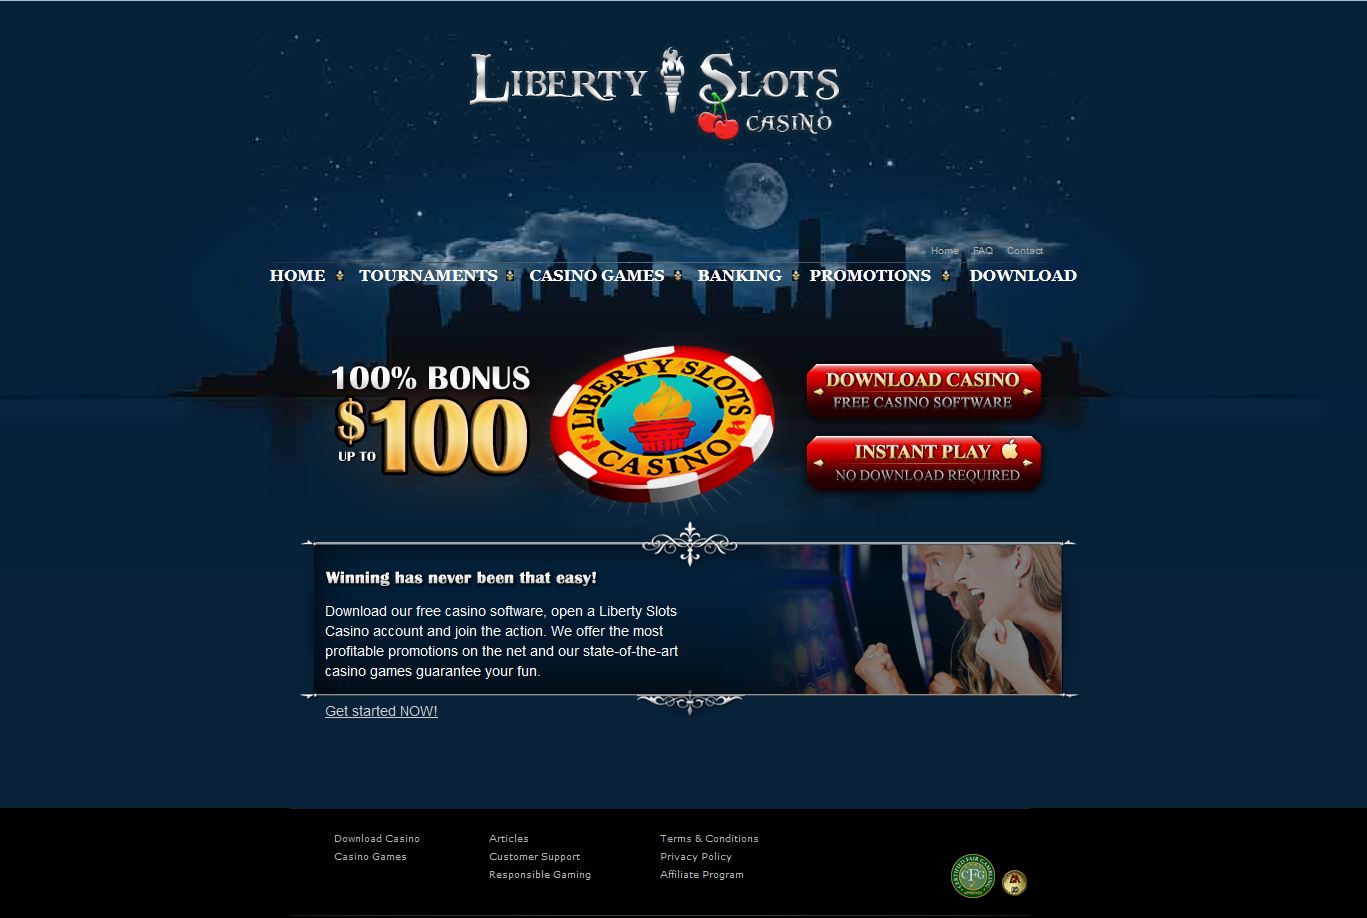 Online casinos like liberty slots